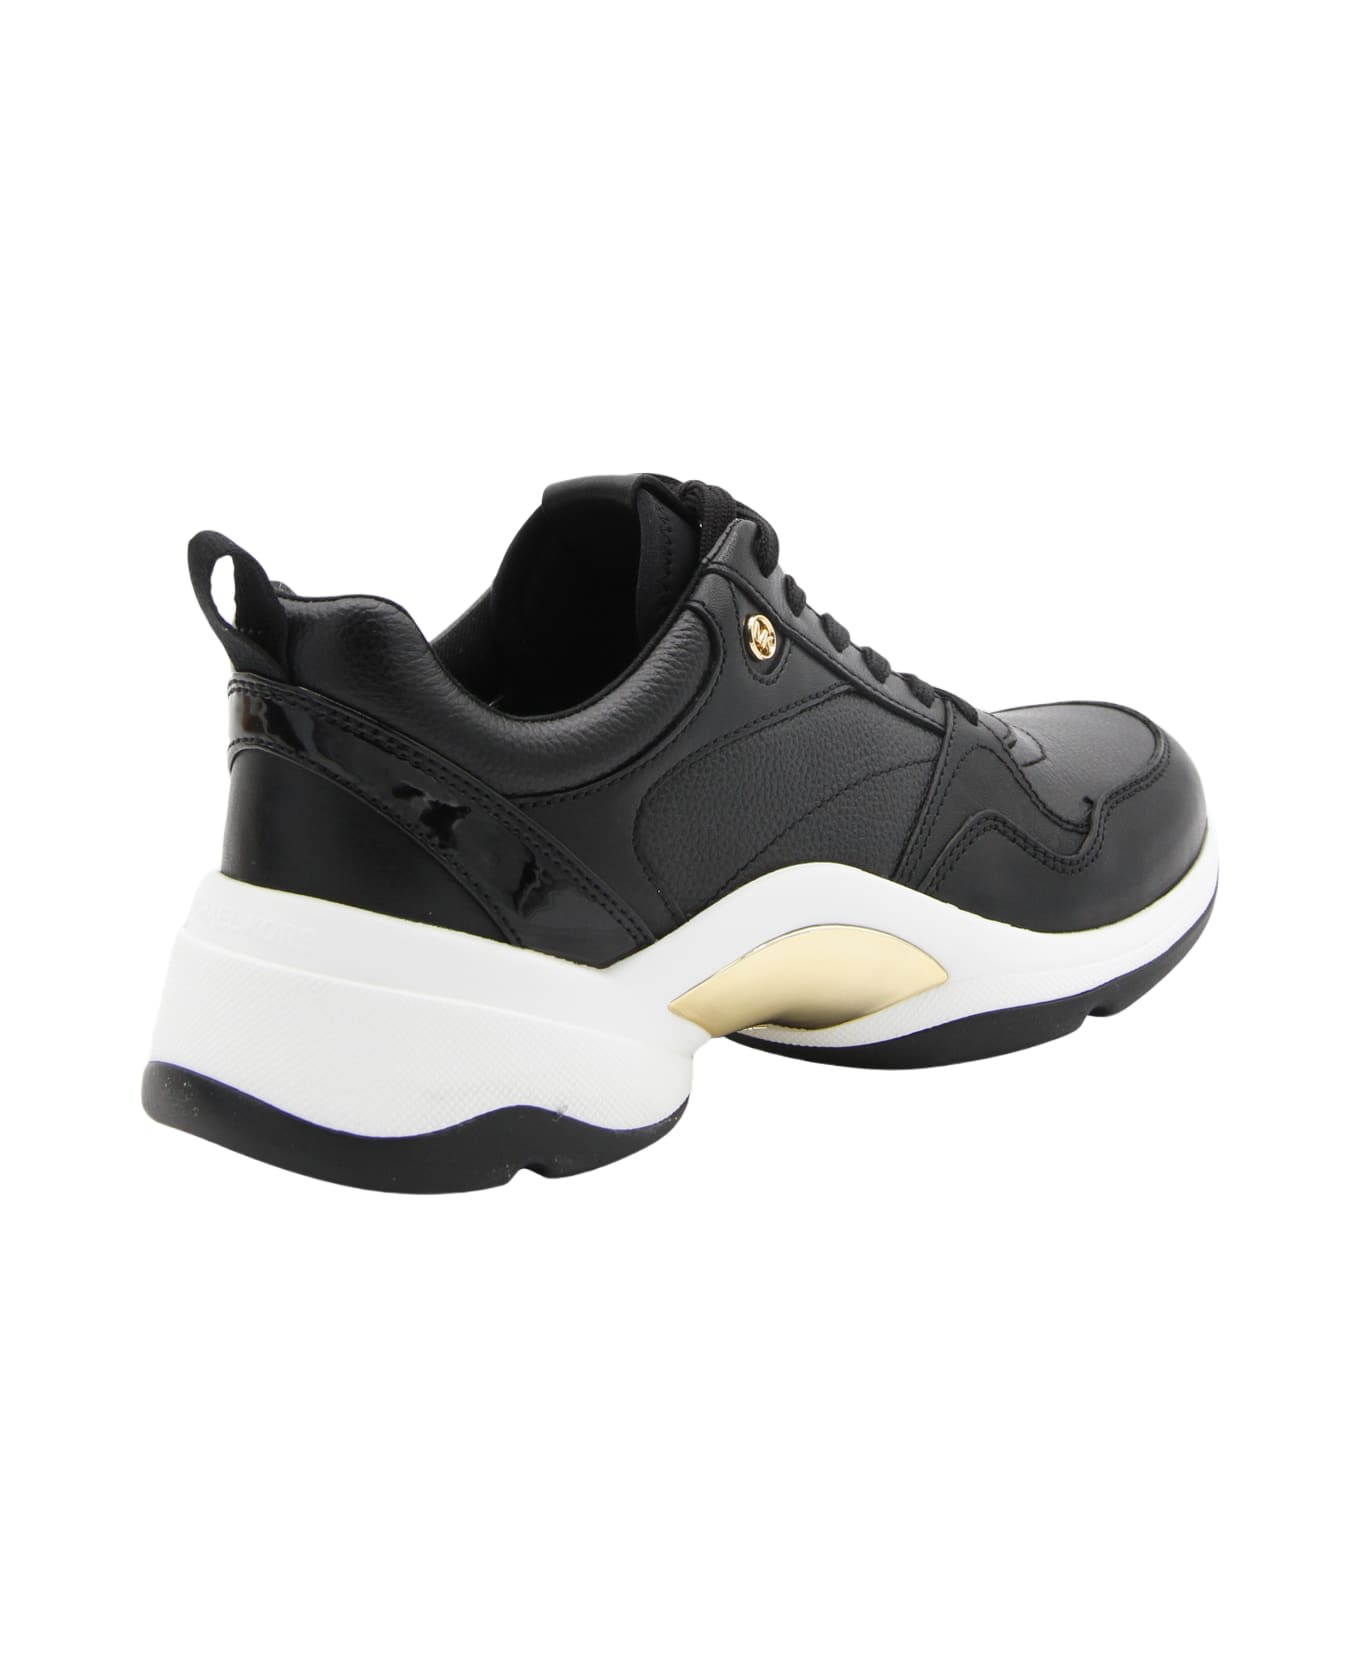 MICHAEL Michael Kors Black Leather Orion Trainer Sneakers - Black スニーカー